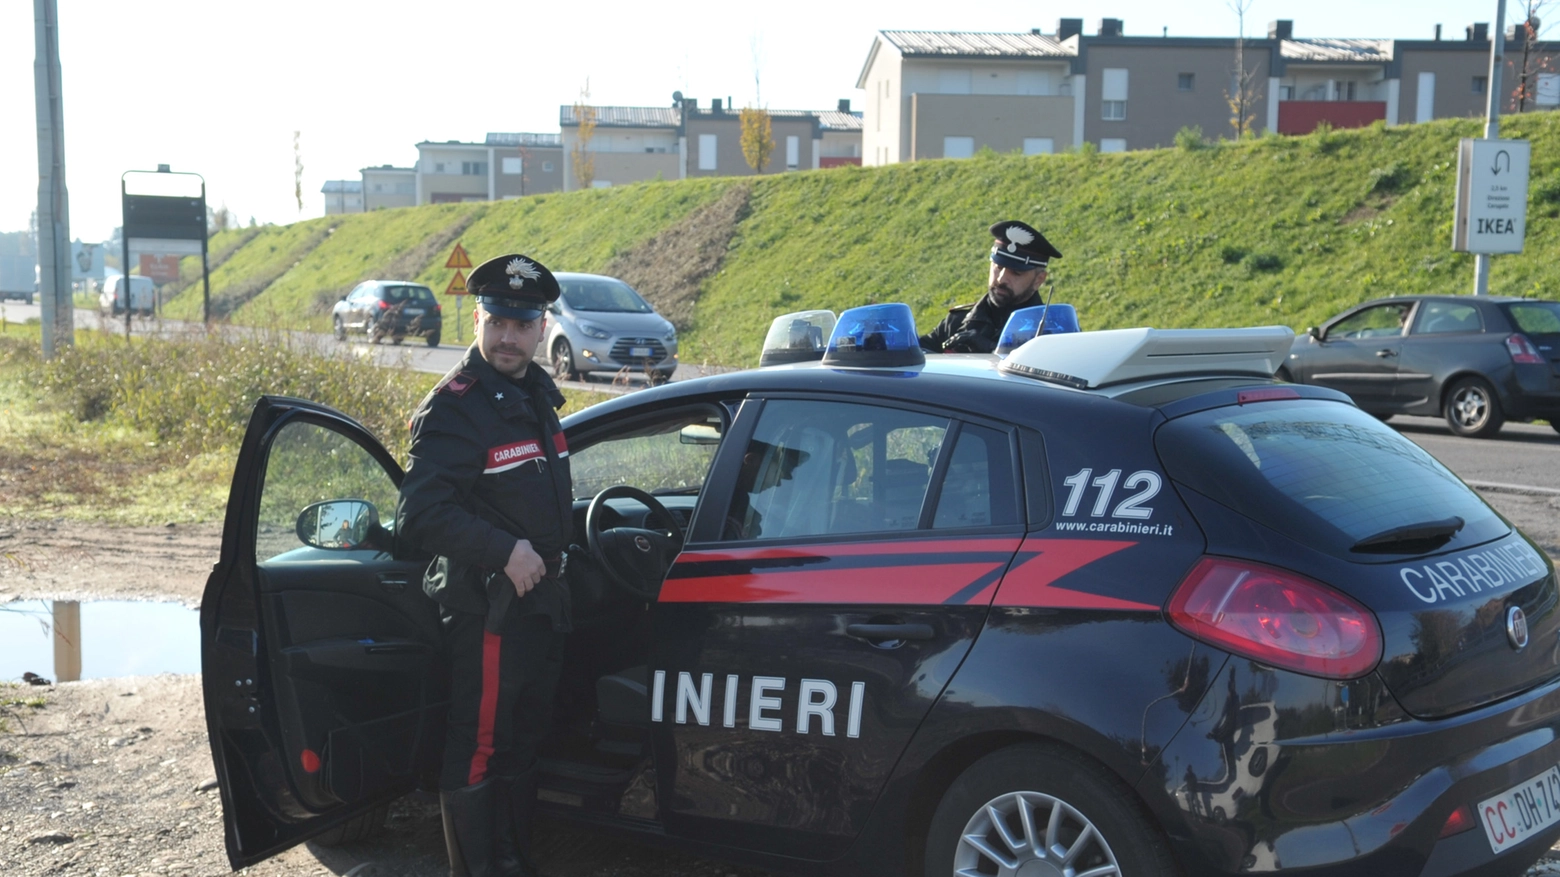 Carabinieri in azione (Newpress)